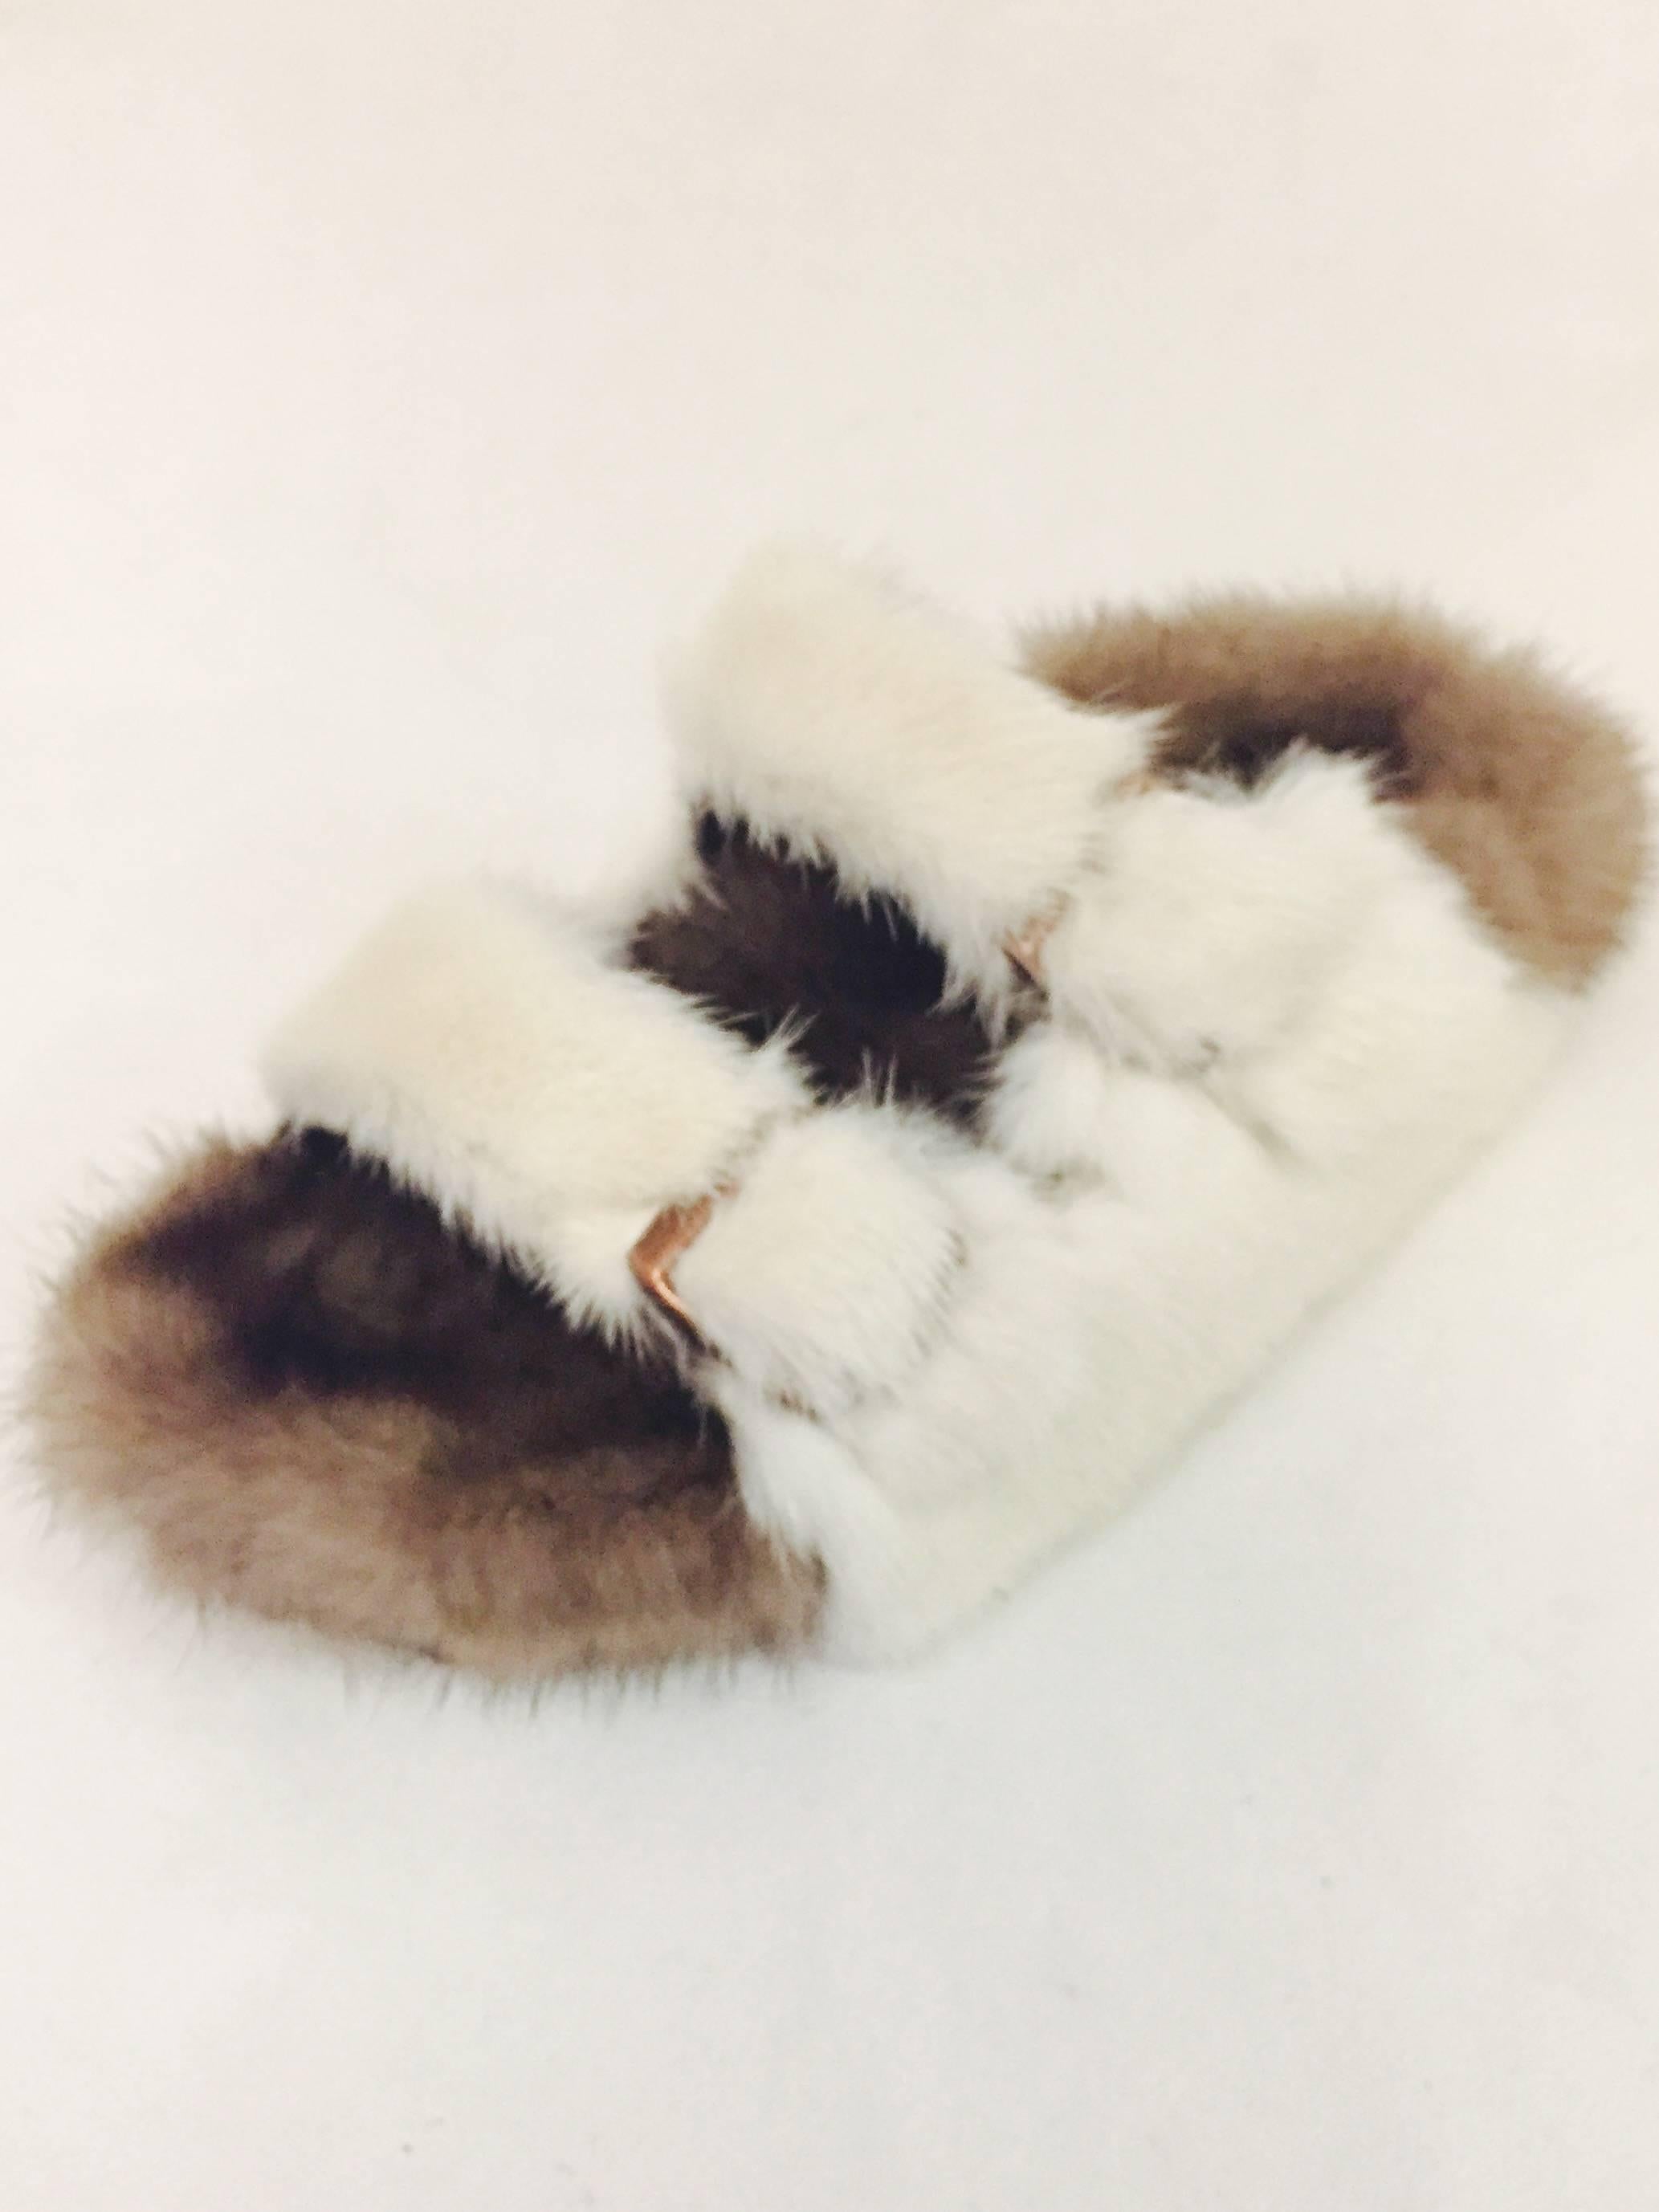 birkenstock shoes with fur